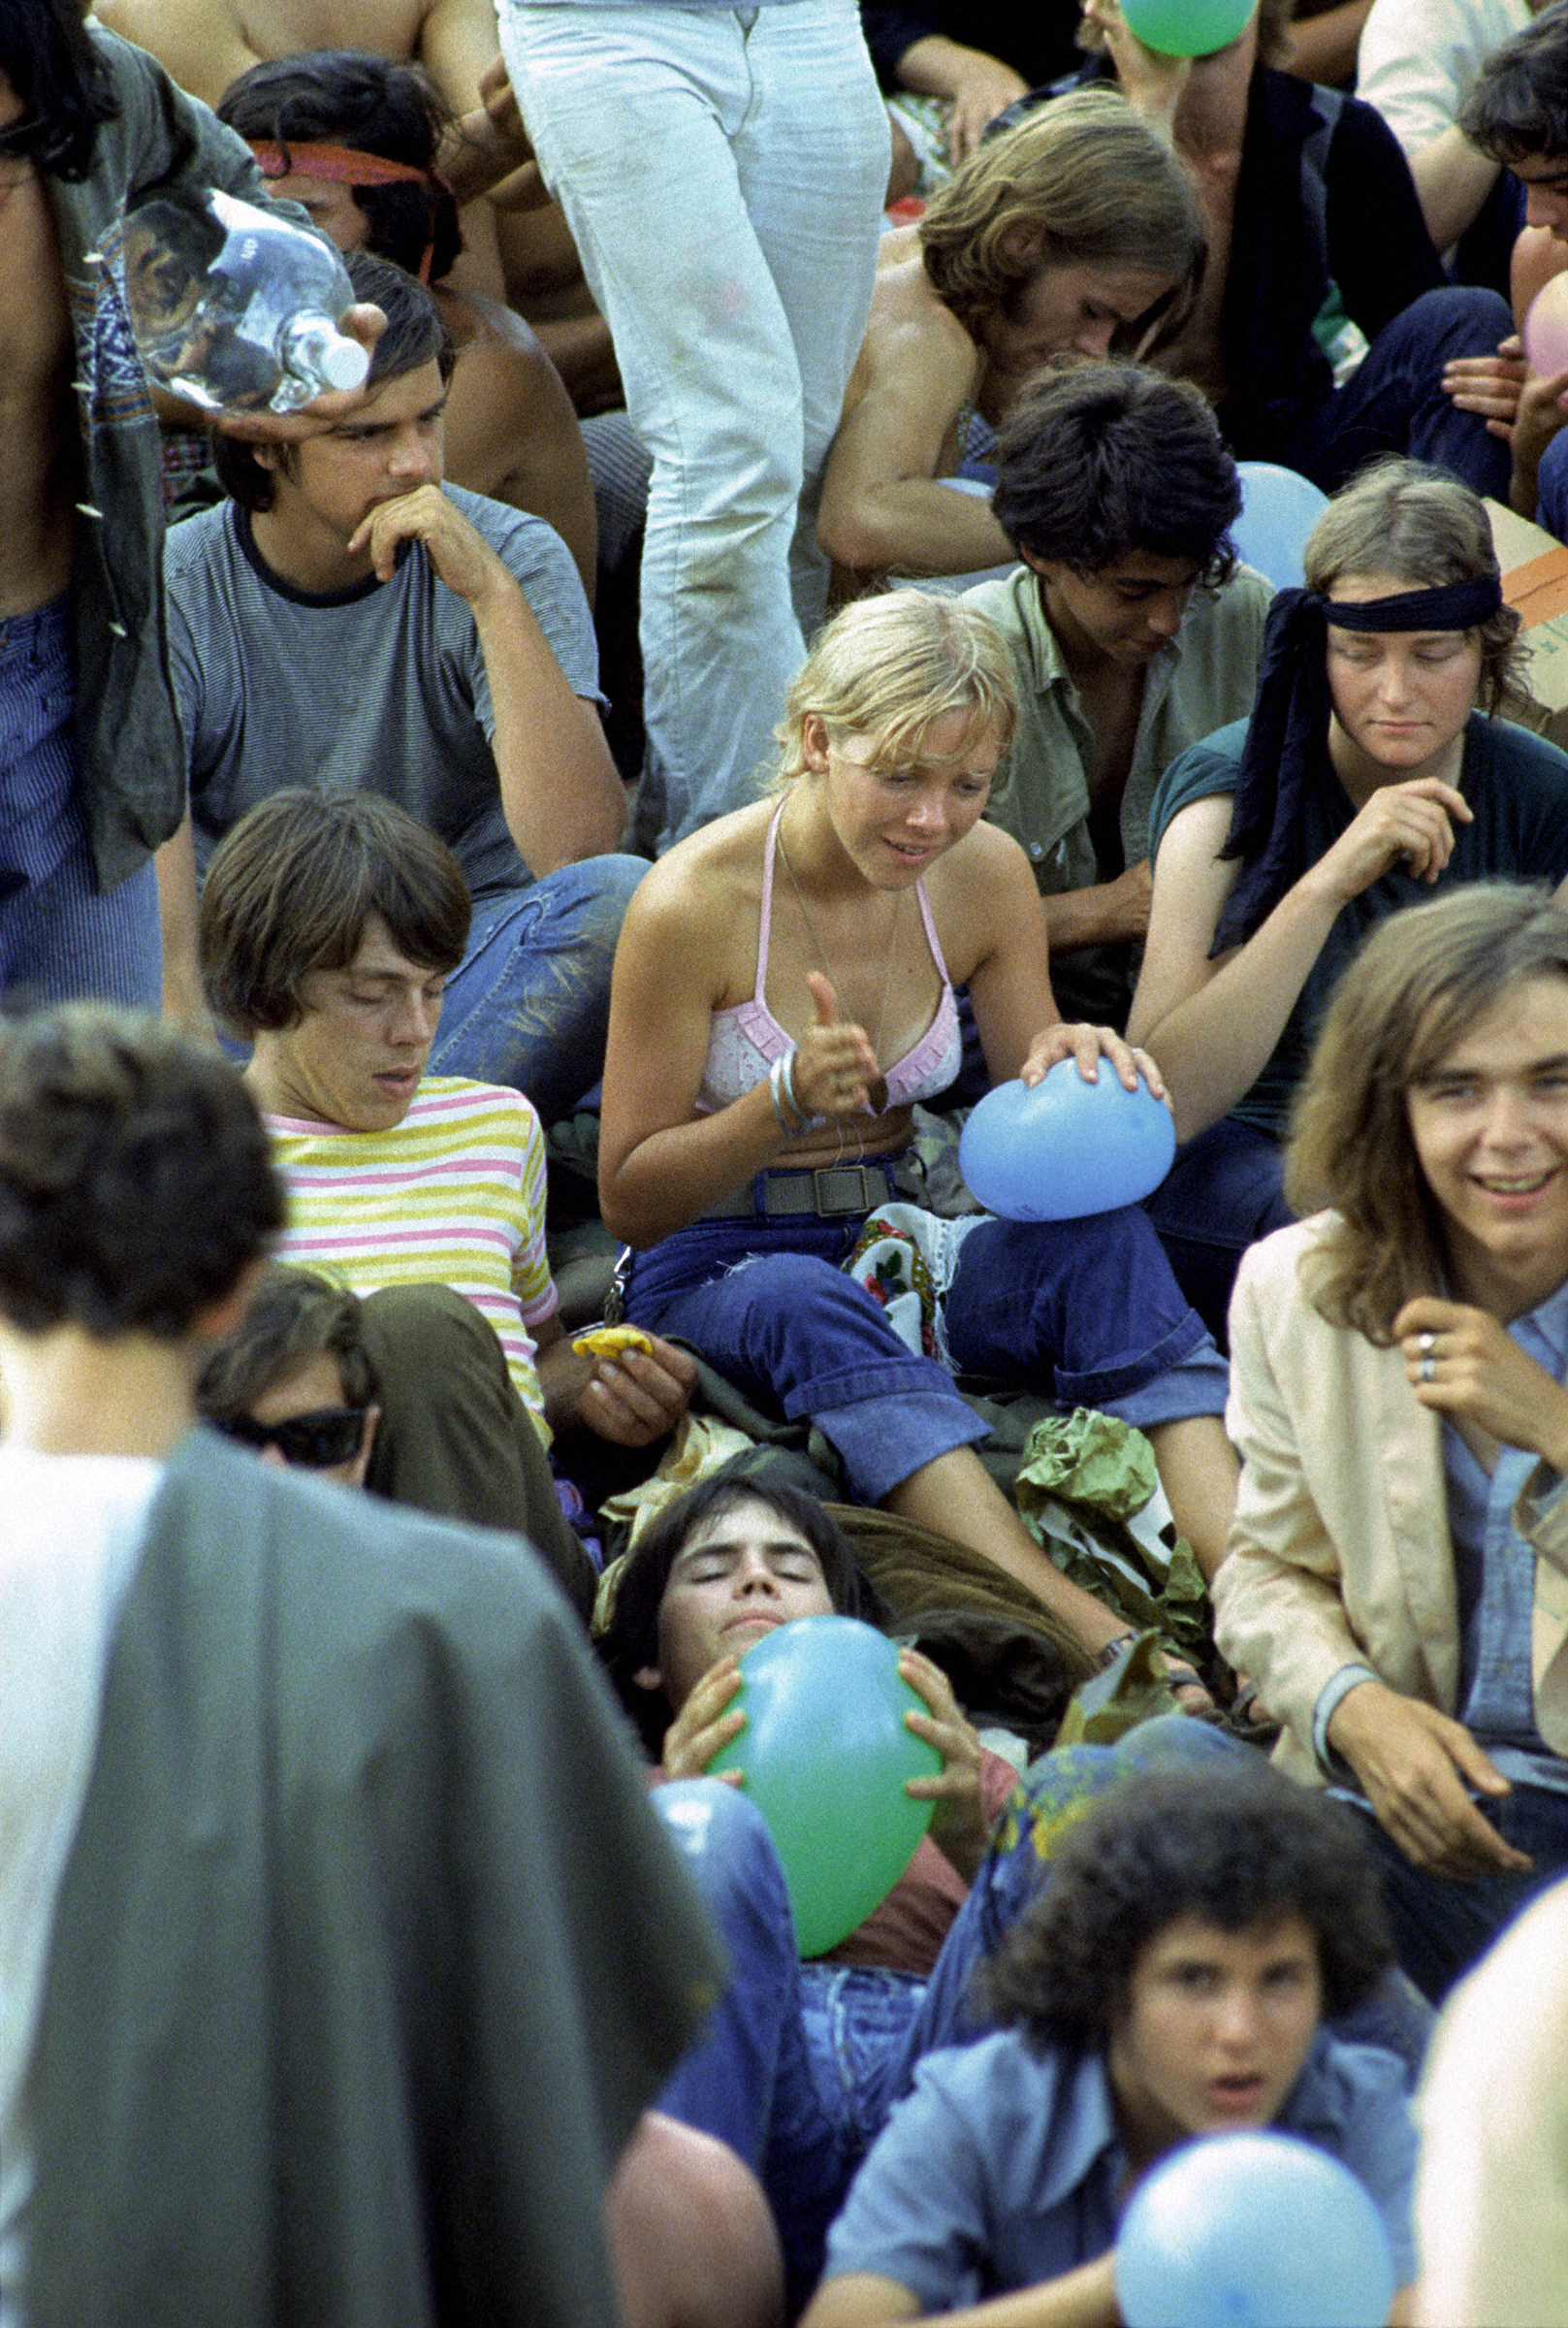 The crowd at Woodstock, in 1969. (Elliott Landy—Redferns/Getty Images)